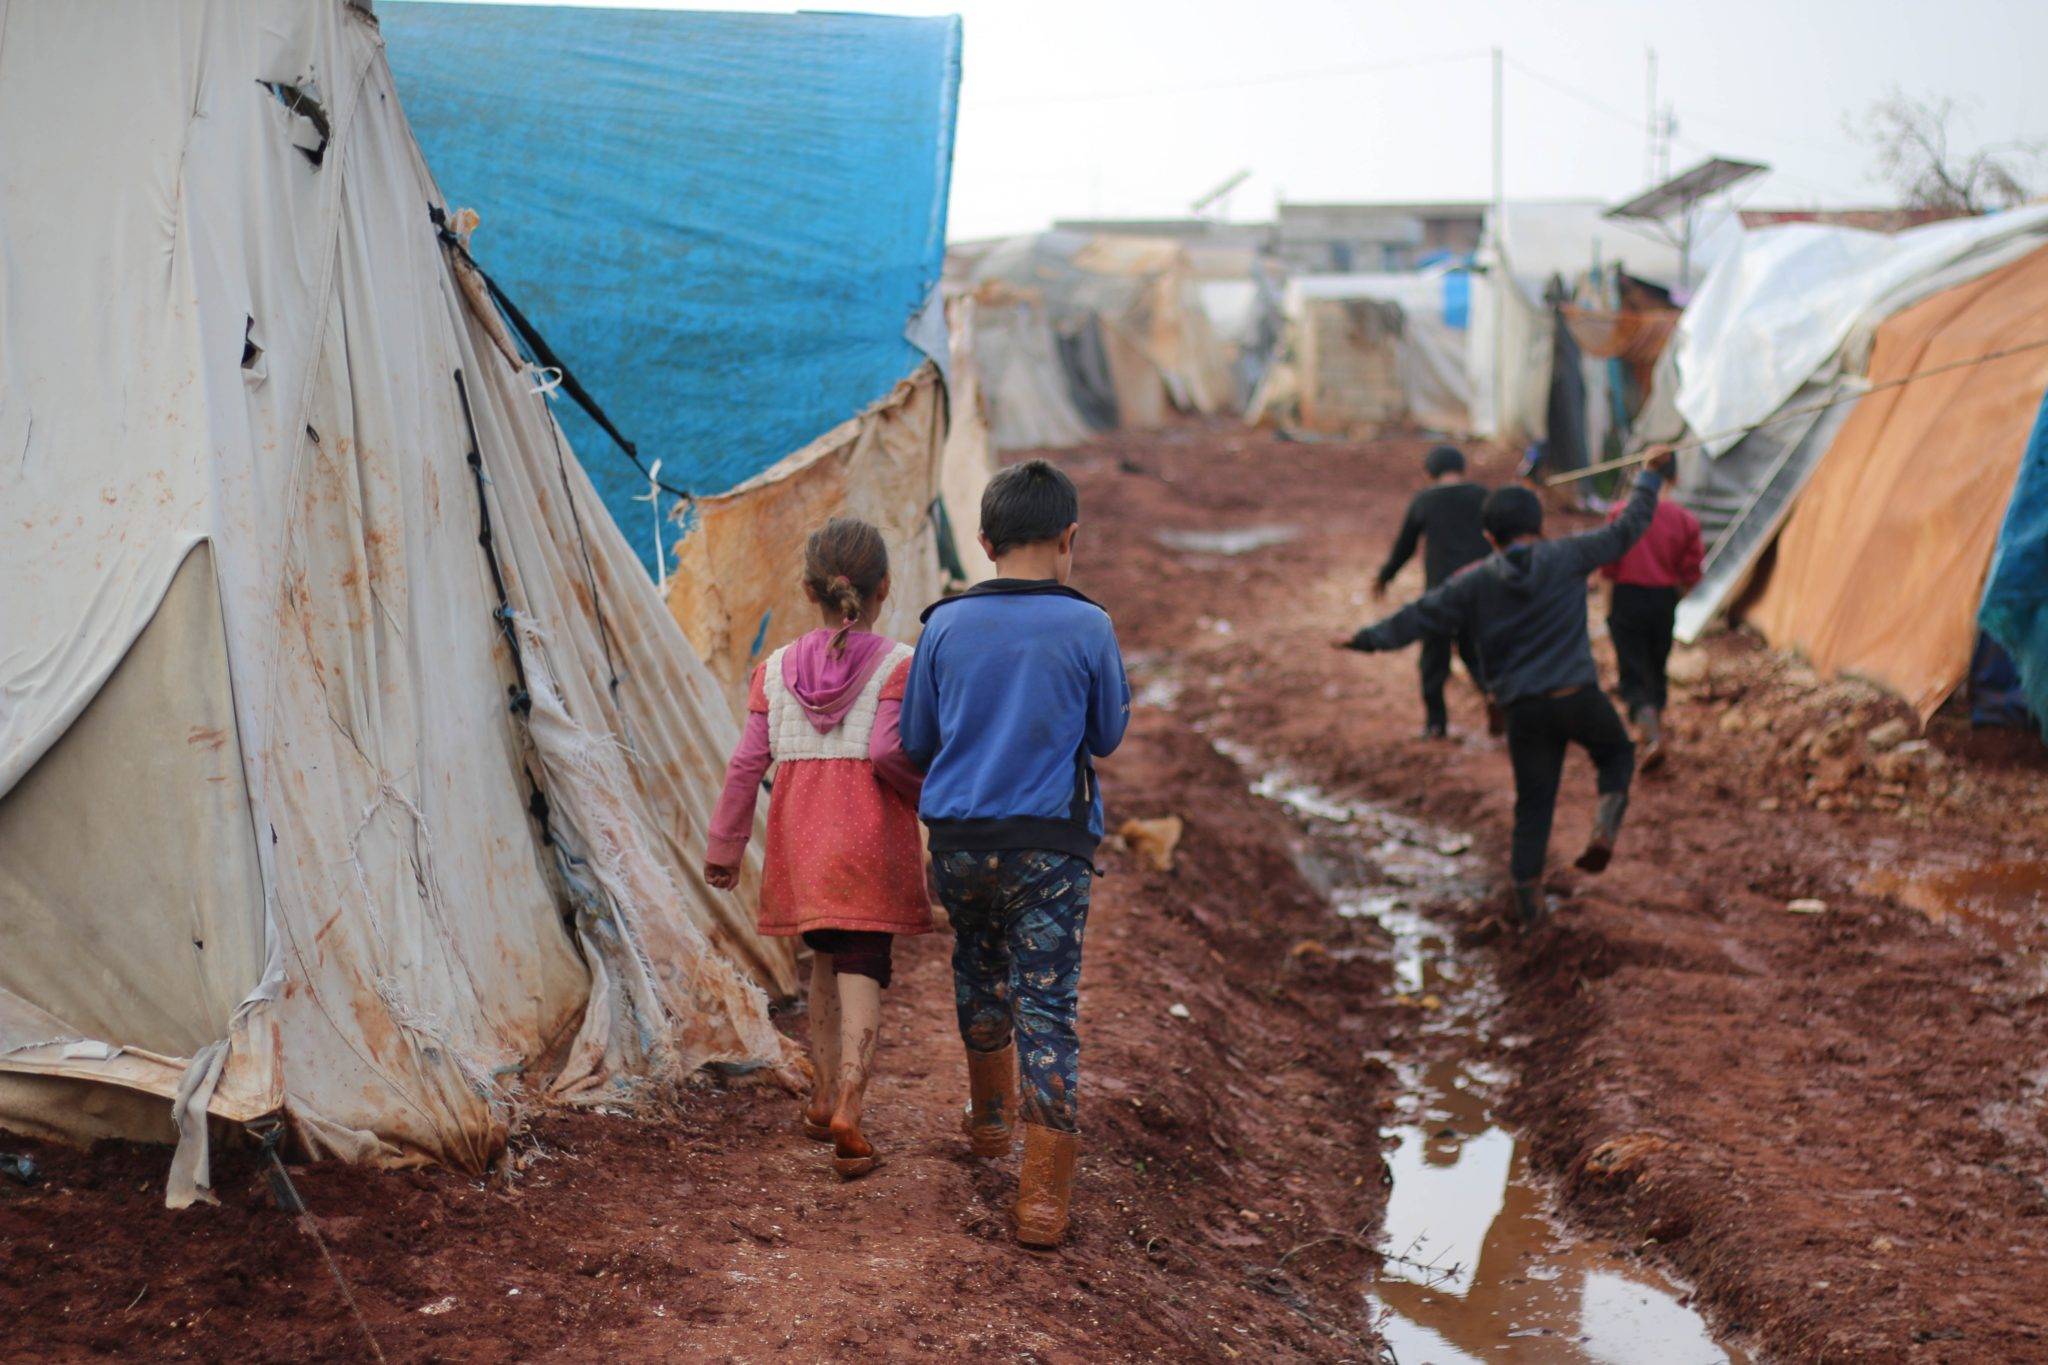 Refugee children in a muddy camp